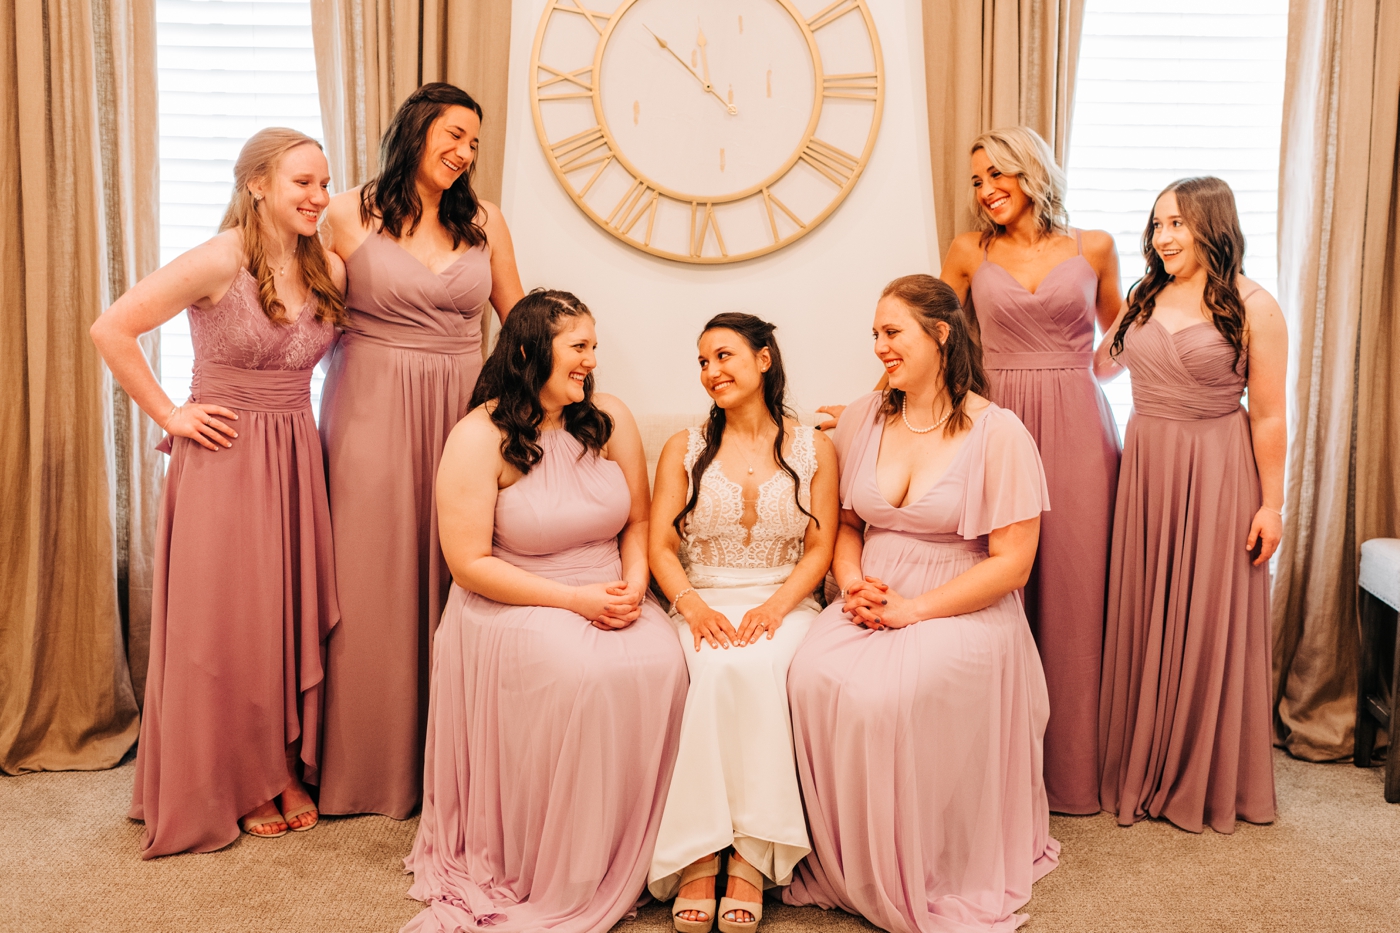 Bridesmaids in lavender chiffon dresses